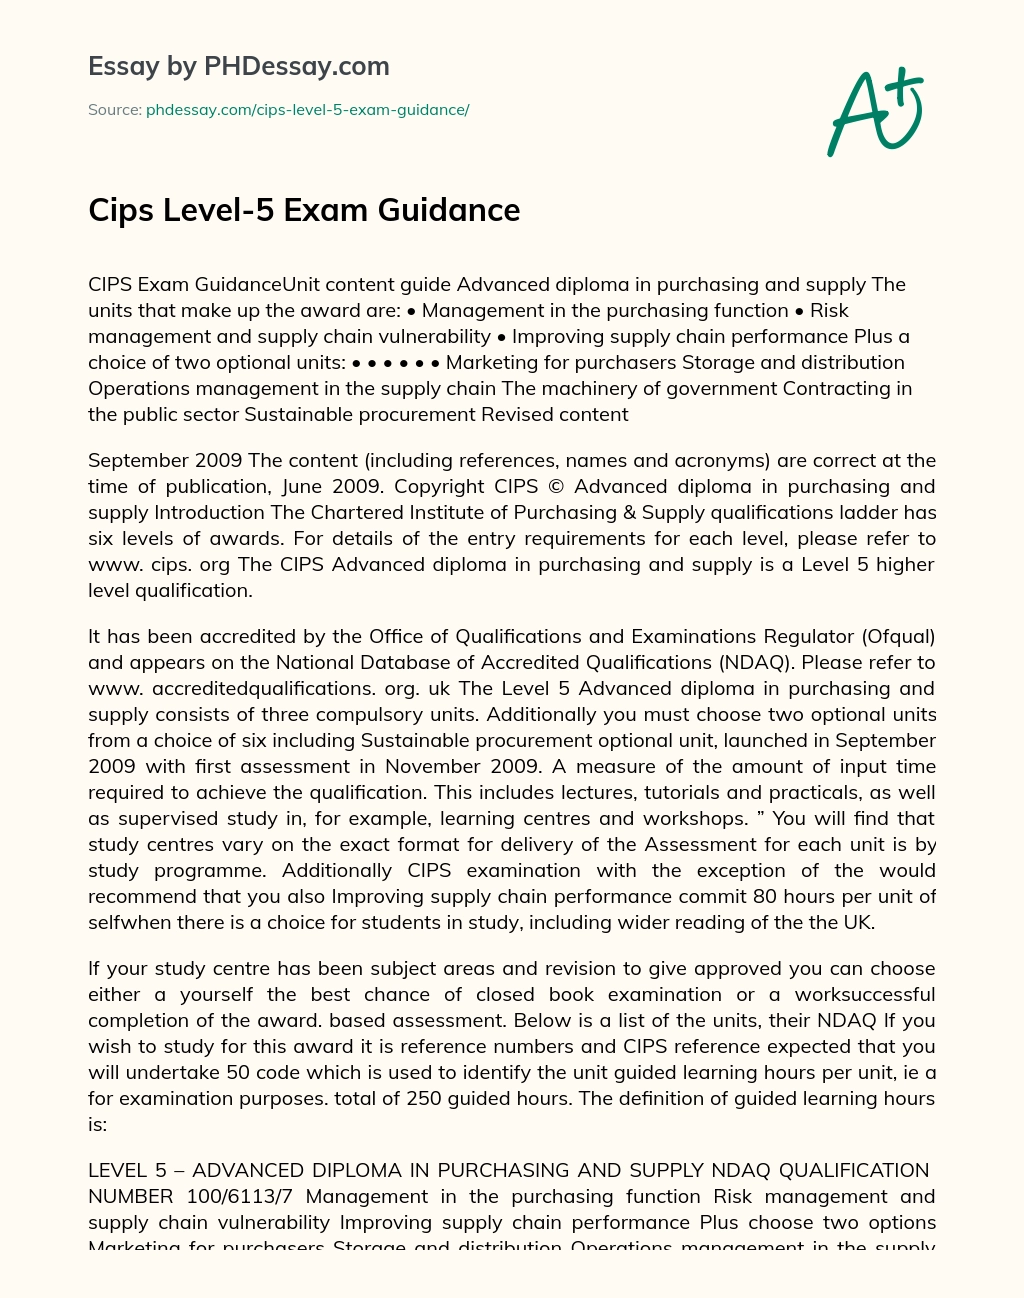 Cips Level-5 Exam Guidance essay